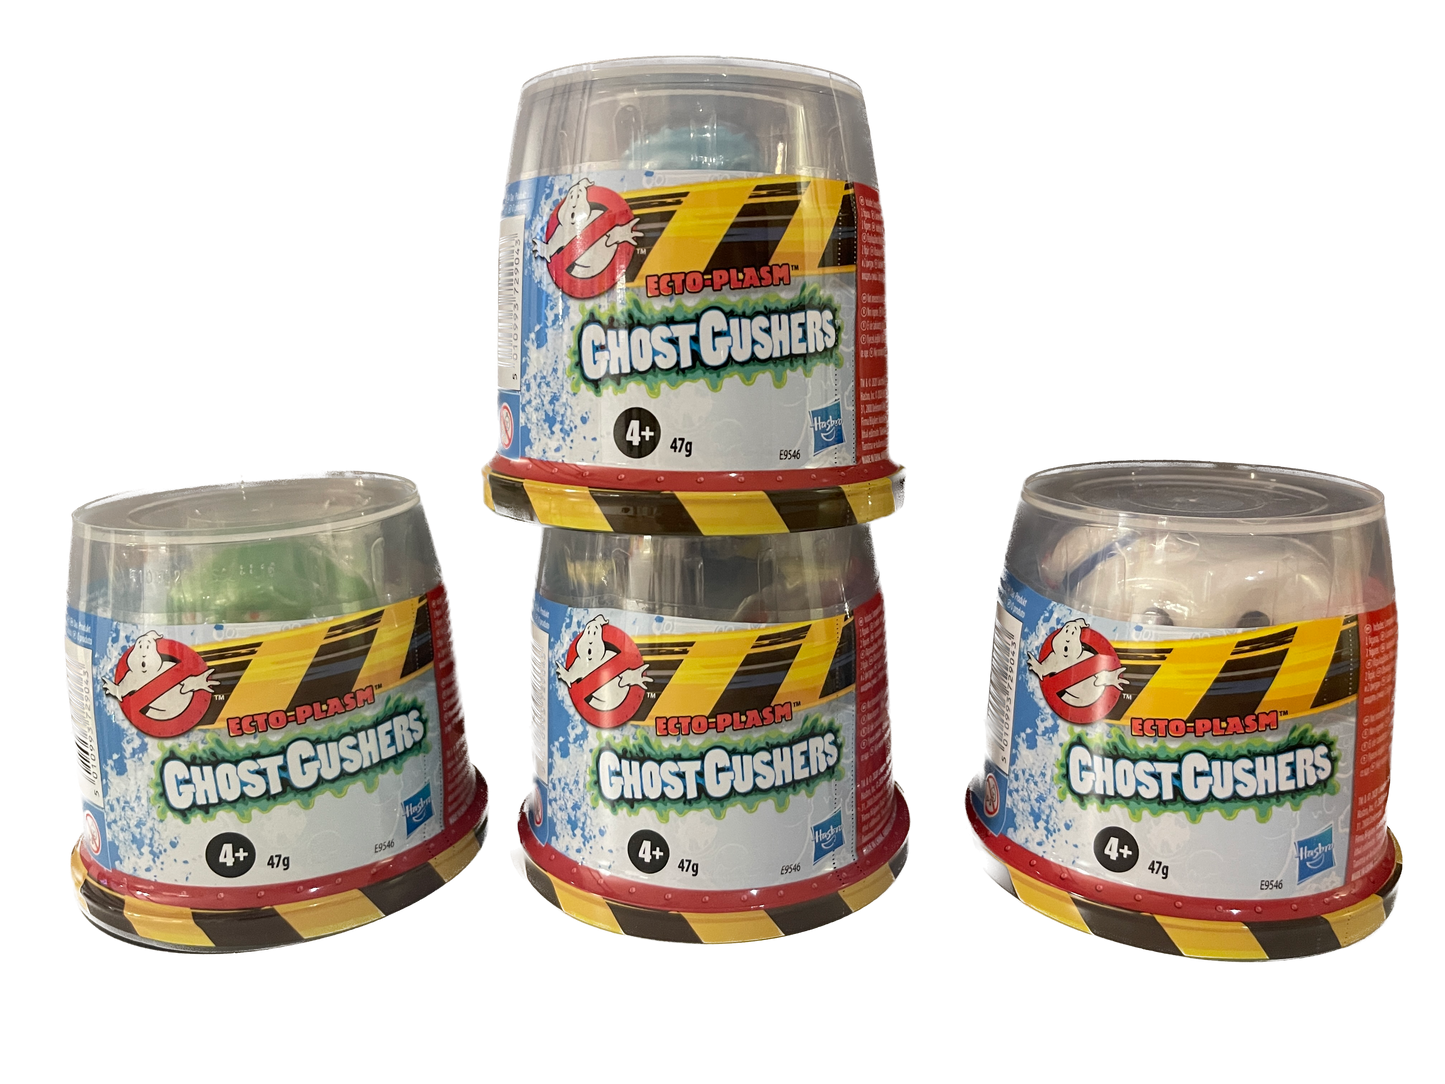 Ghostbusters Ecto-Plasm Ghost Gushers Minifiguren (2 Figuren mit Geisterschleim)